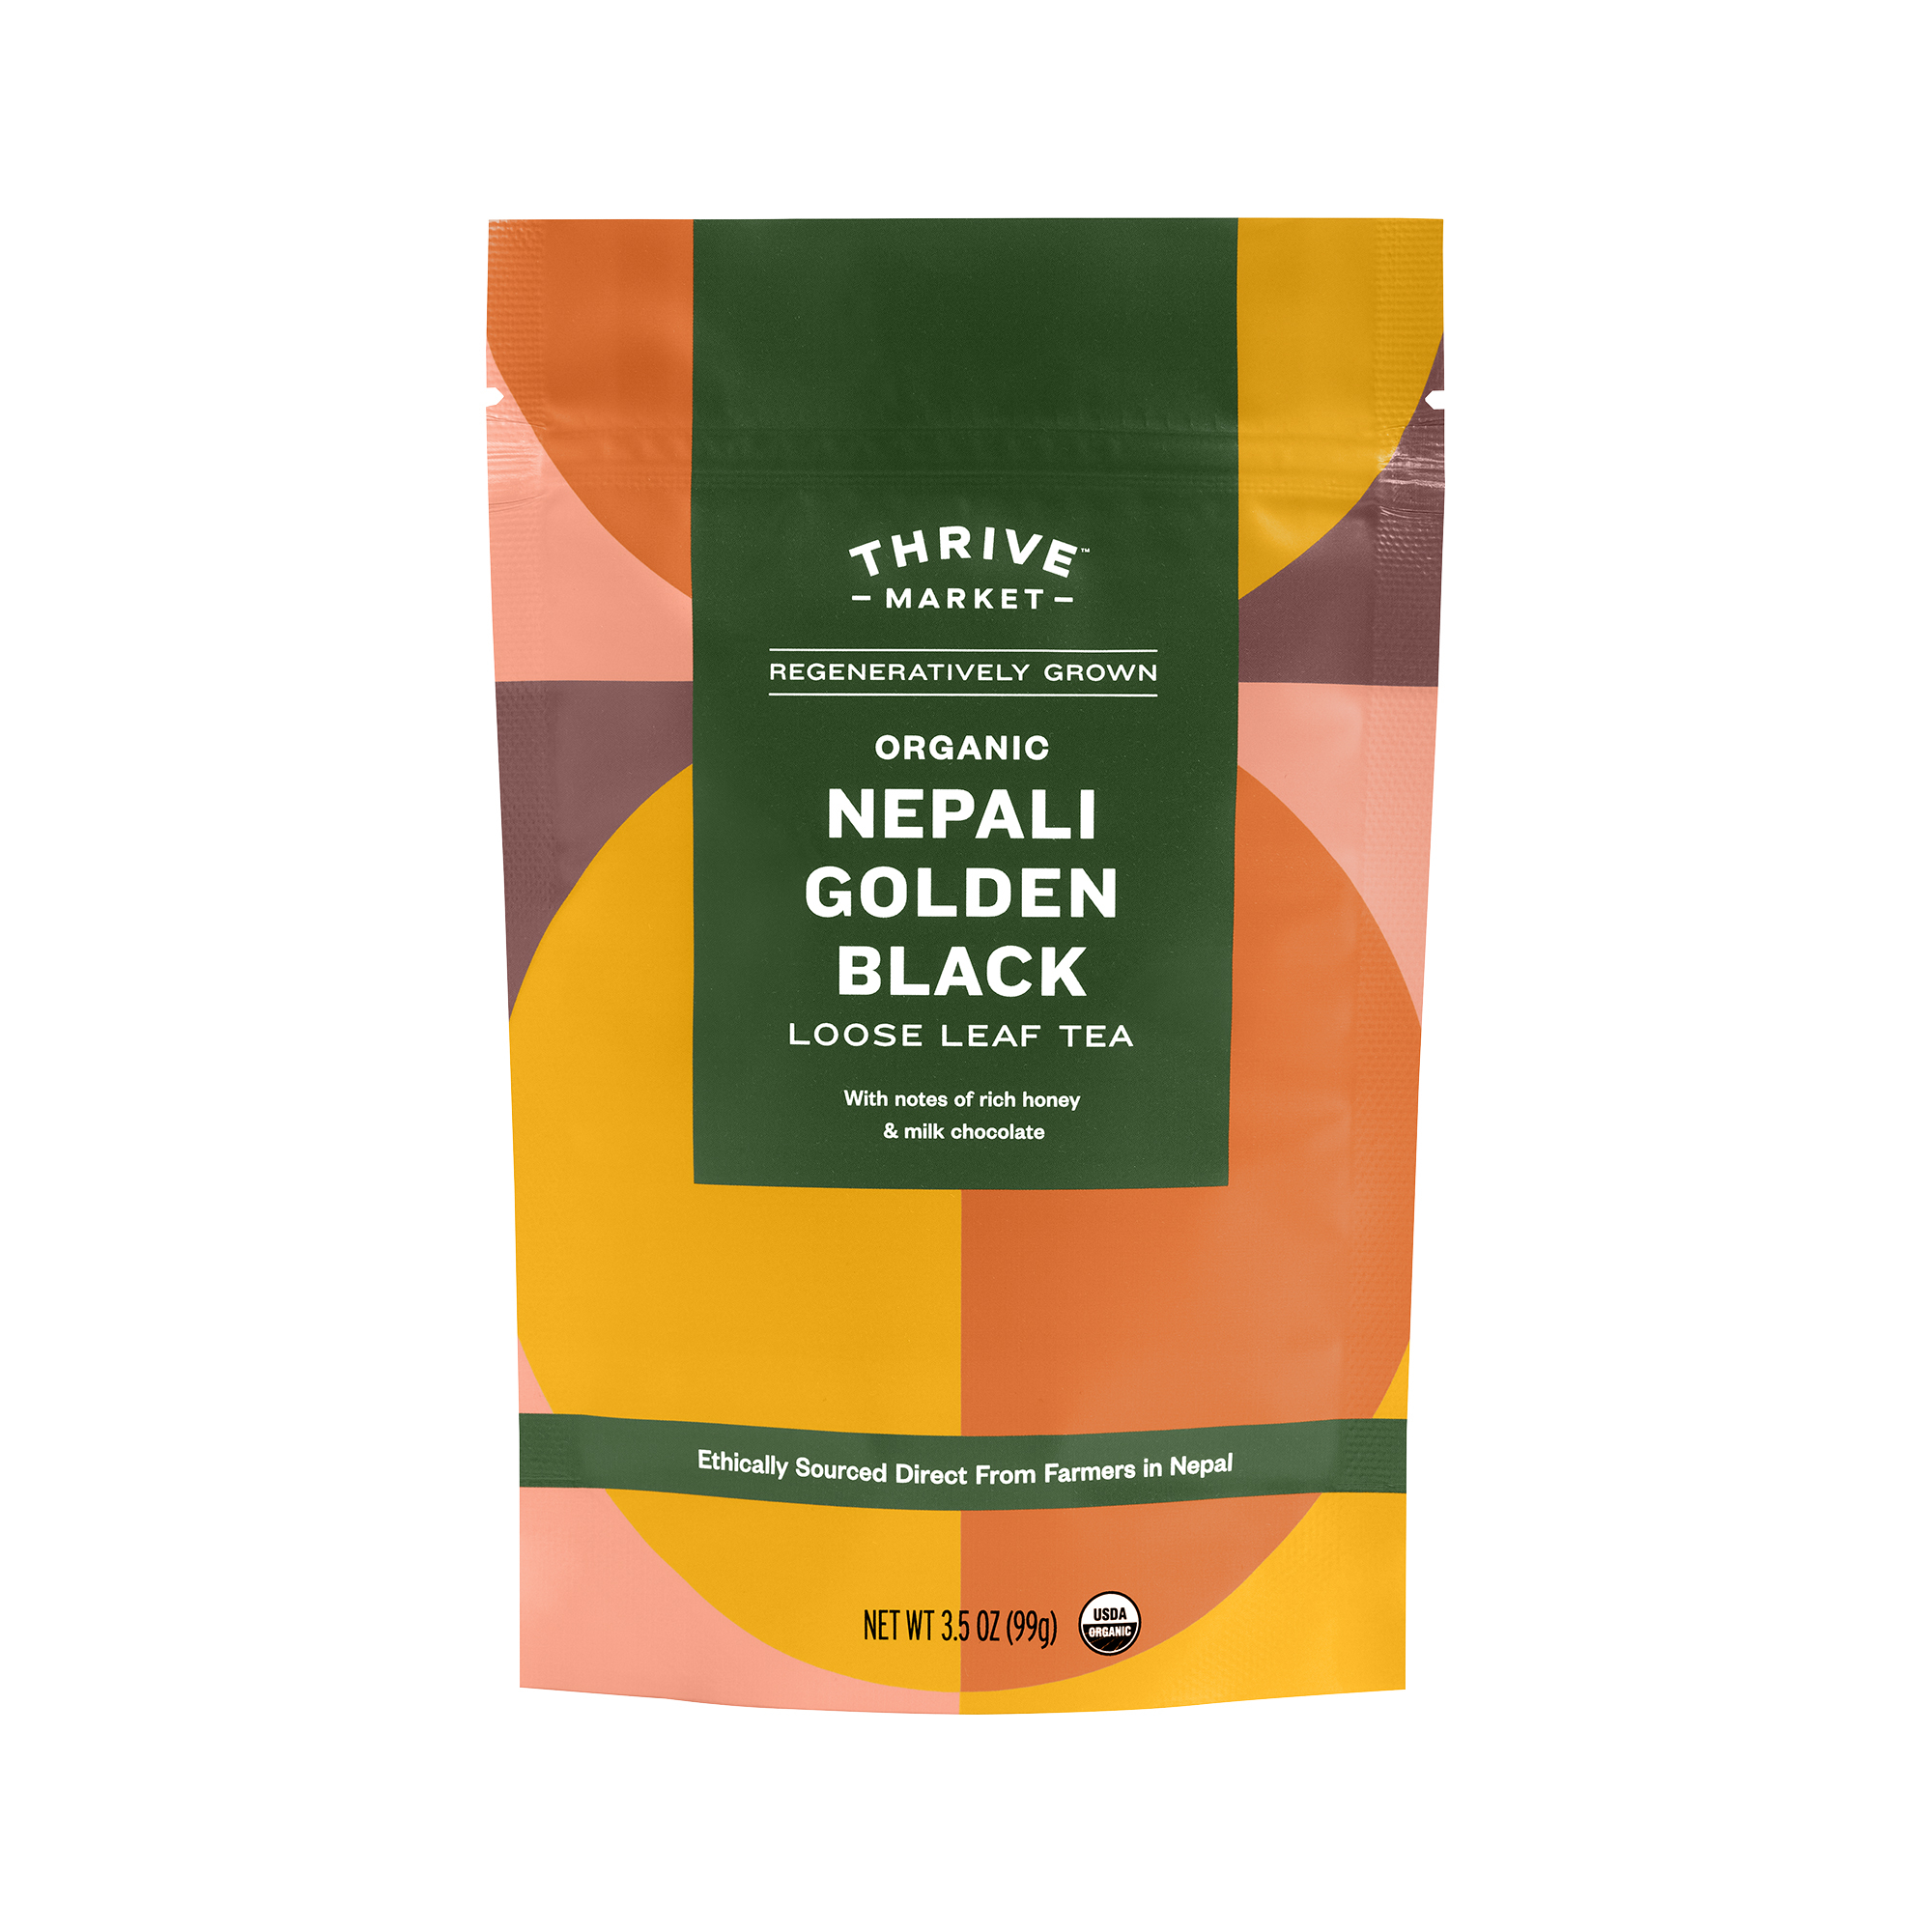 Thrive Market Regeneratively Grown Organic Nepali Golden Black Loose Leaf Tea 3.5 oz pouch